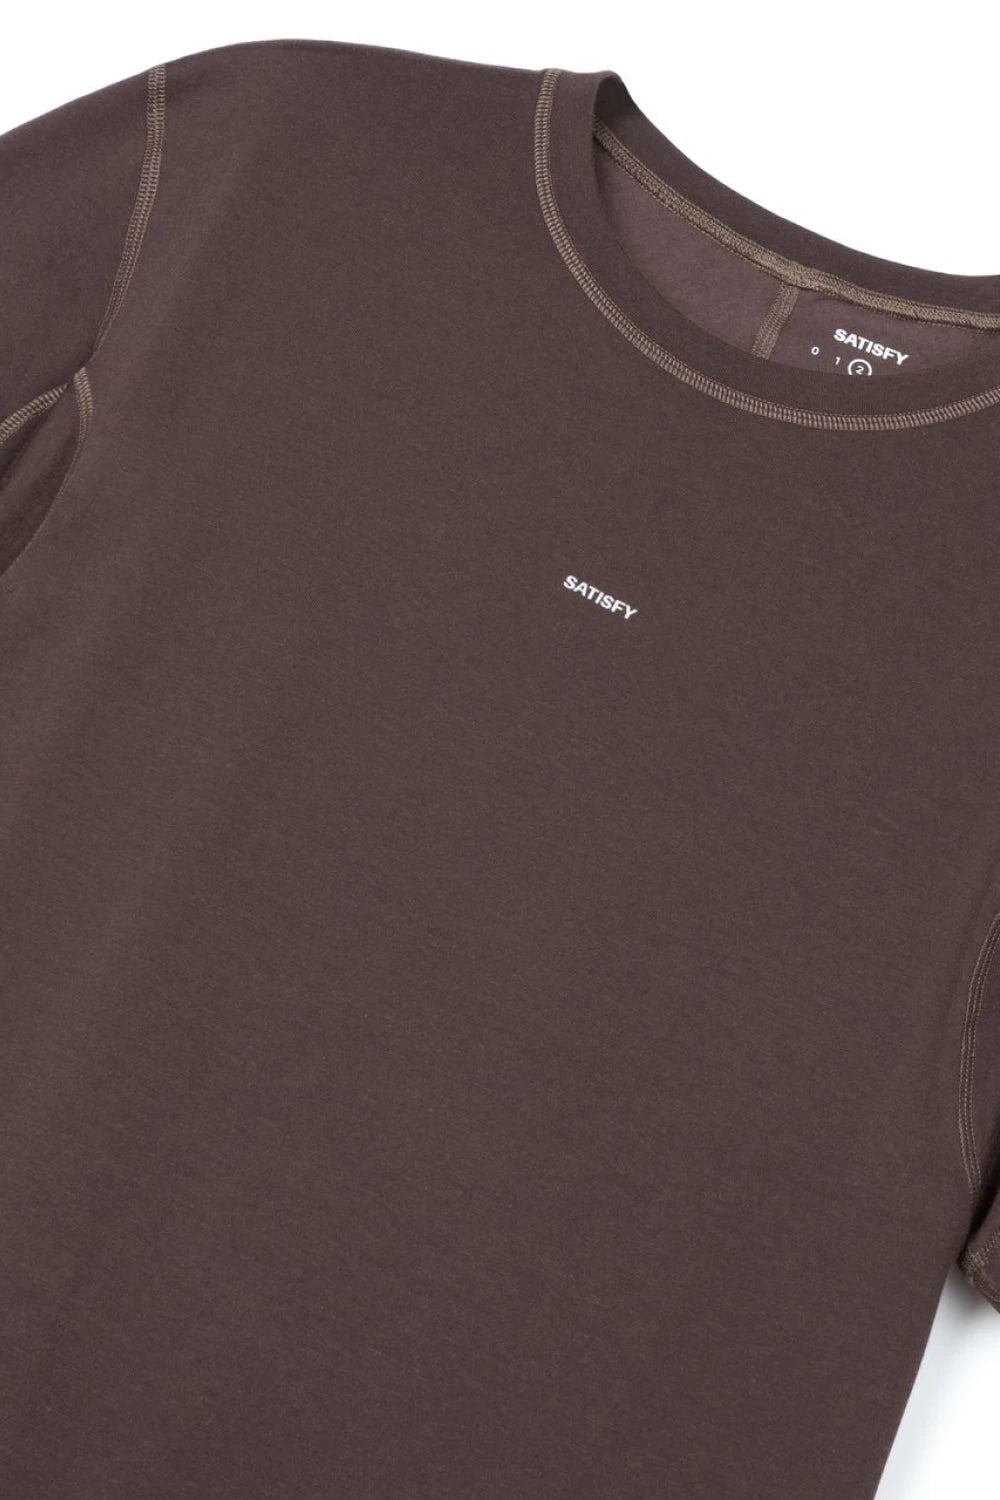 Satisfy SoftCell™ Cordura Climb T-Shirt - Brown